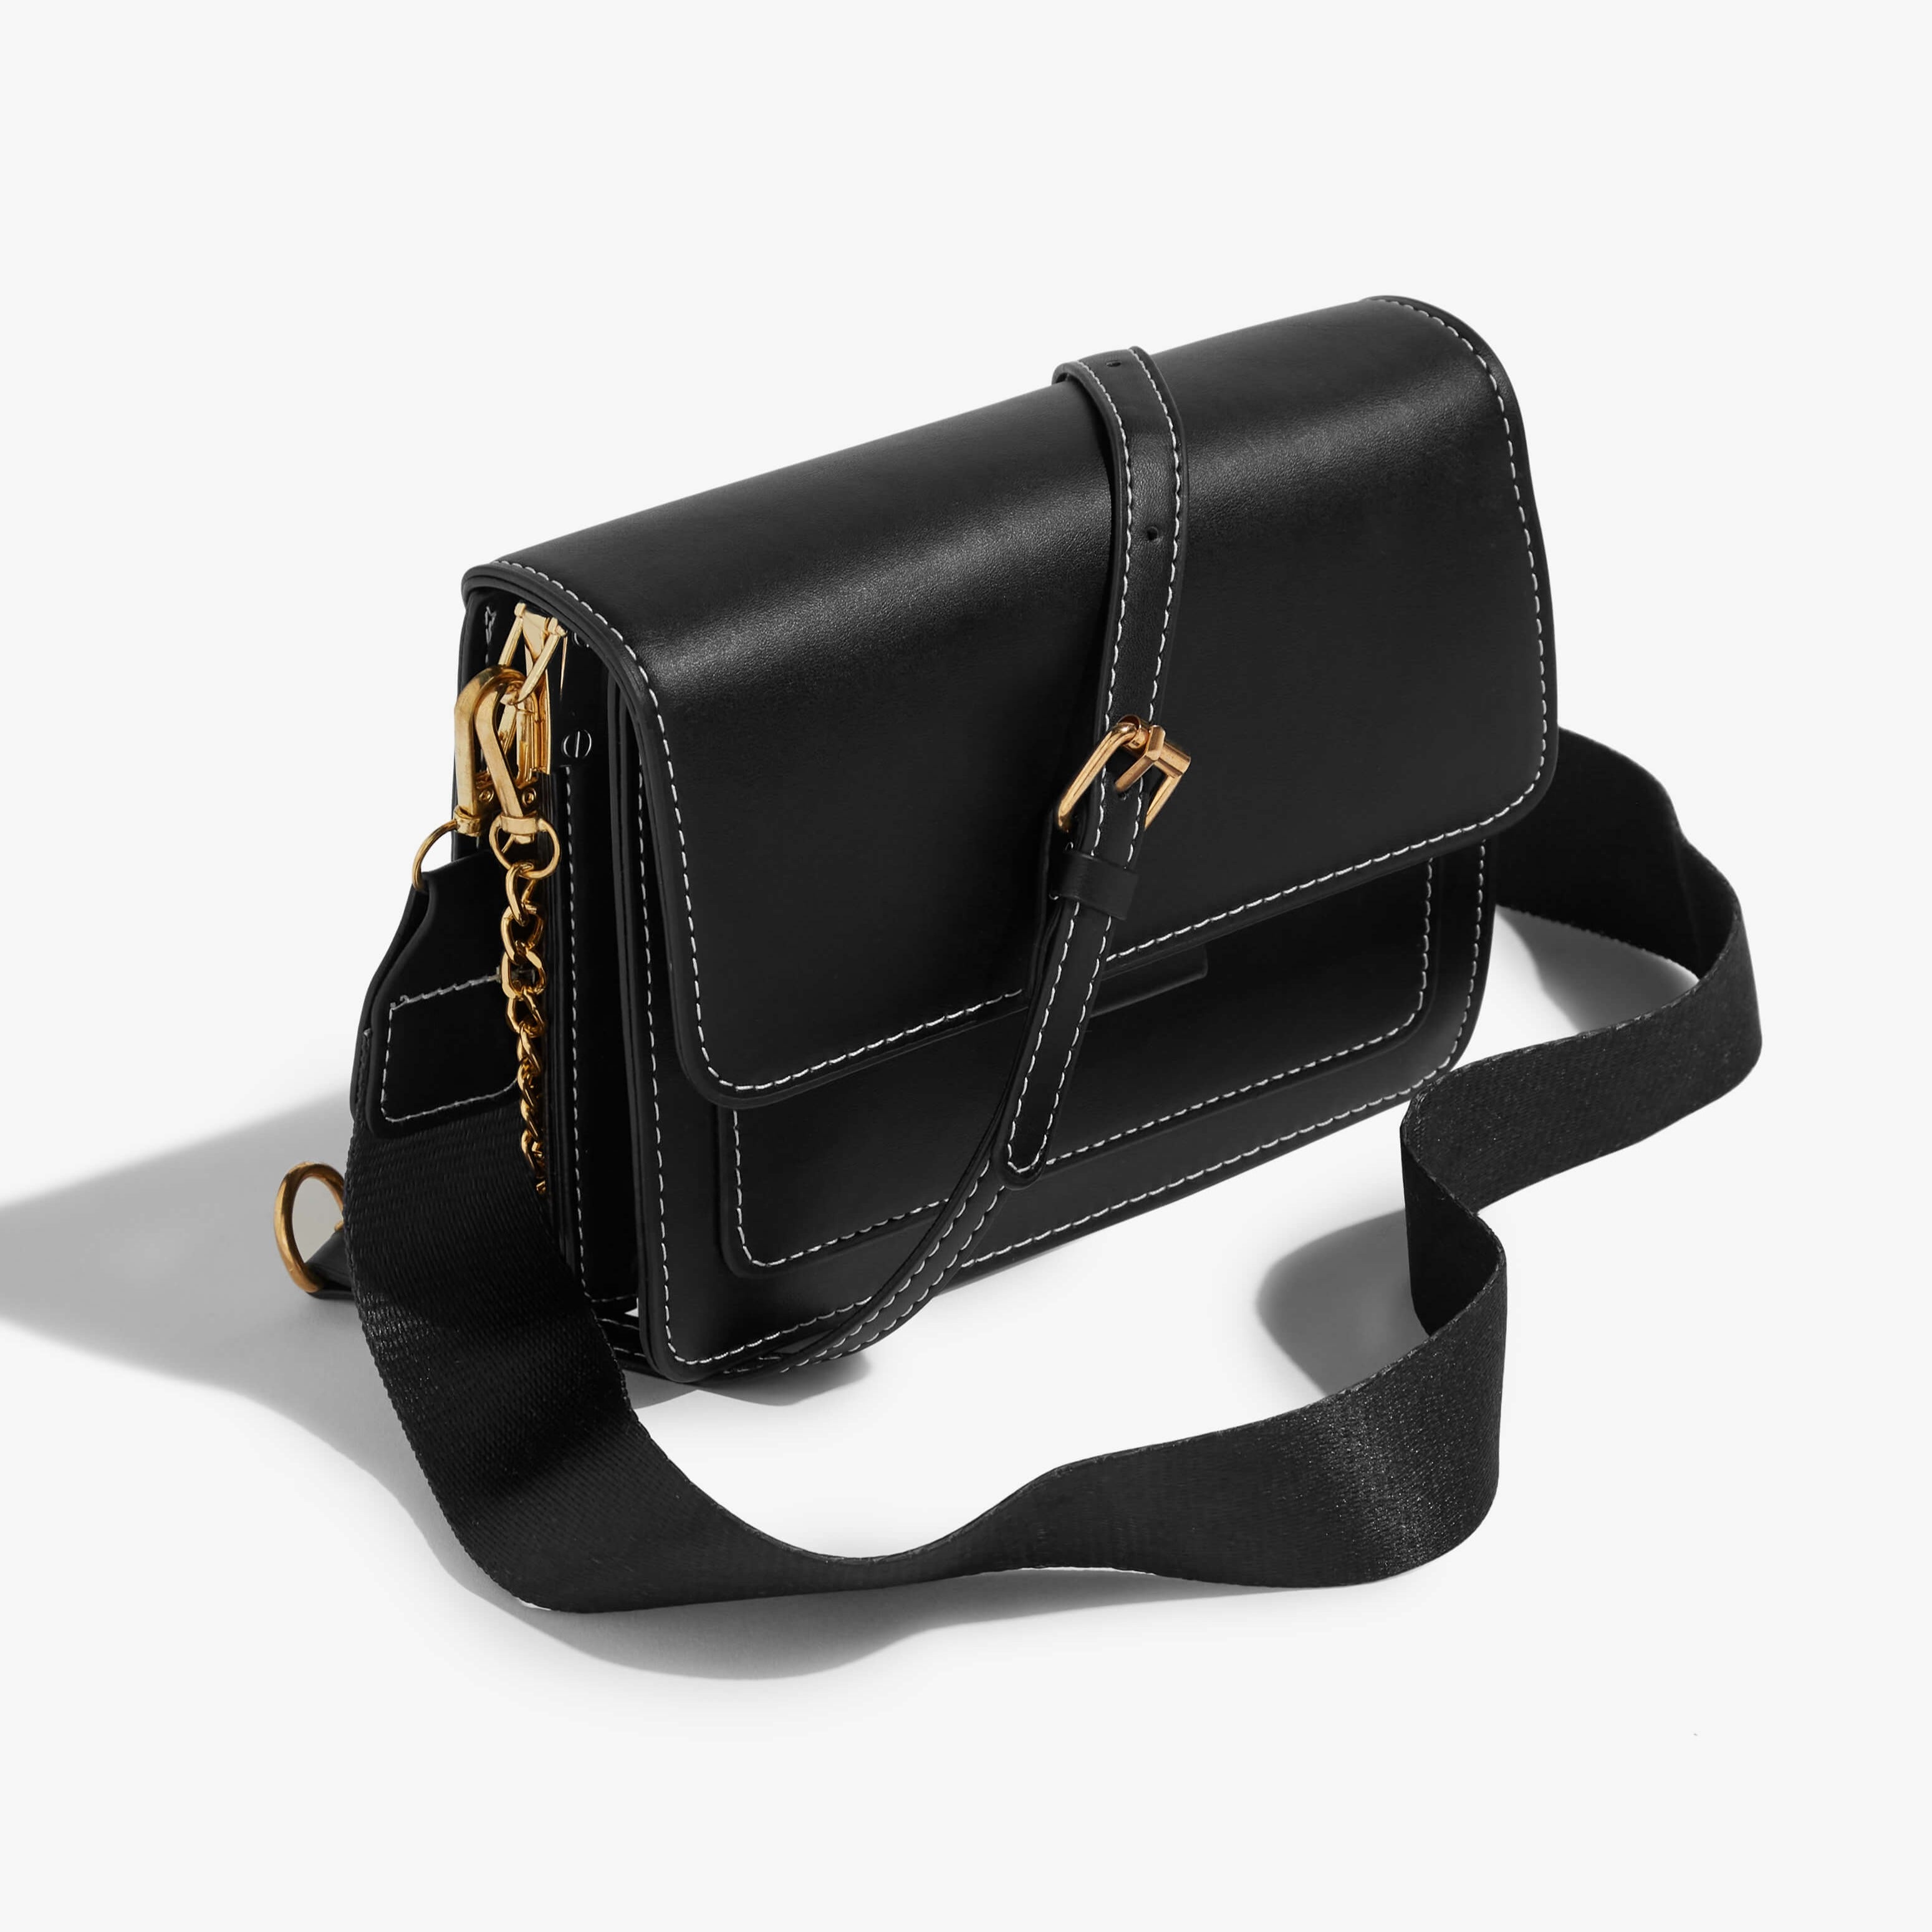 Black-Handbag-With-Gold-Hardware